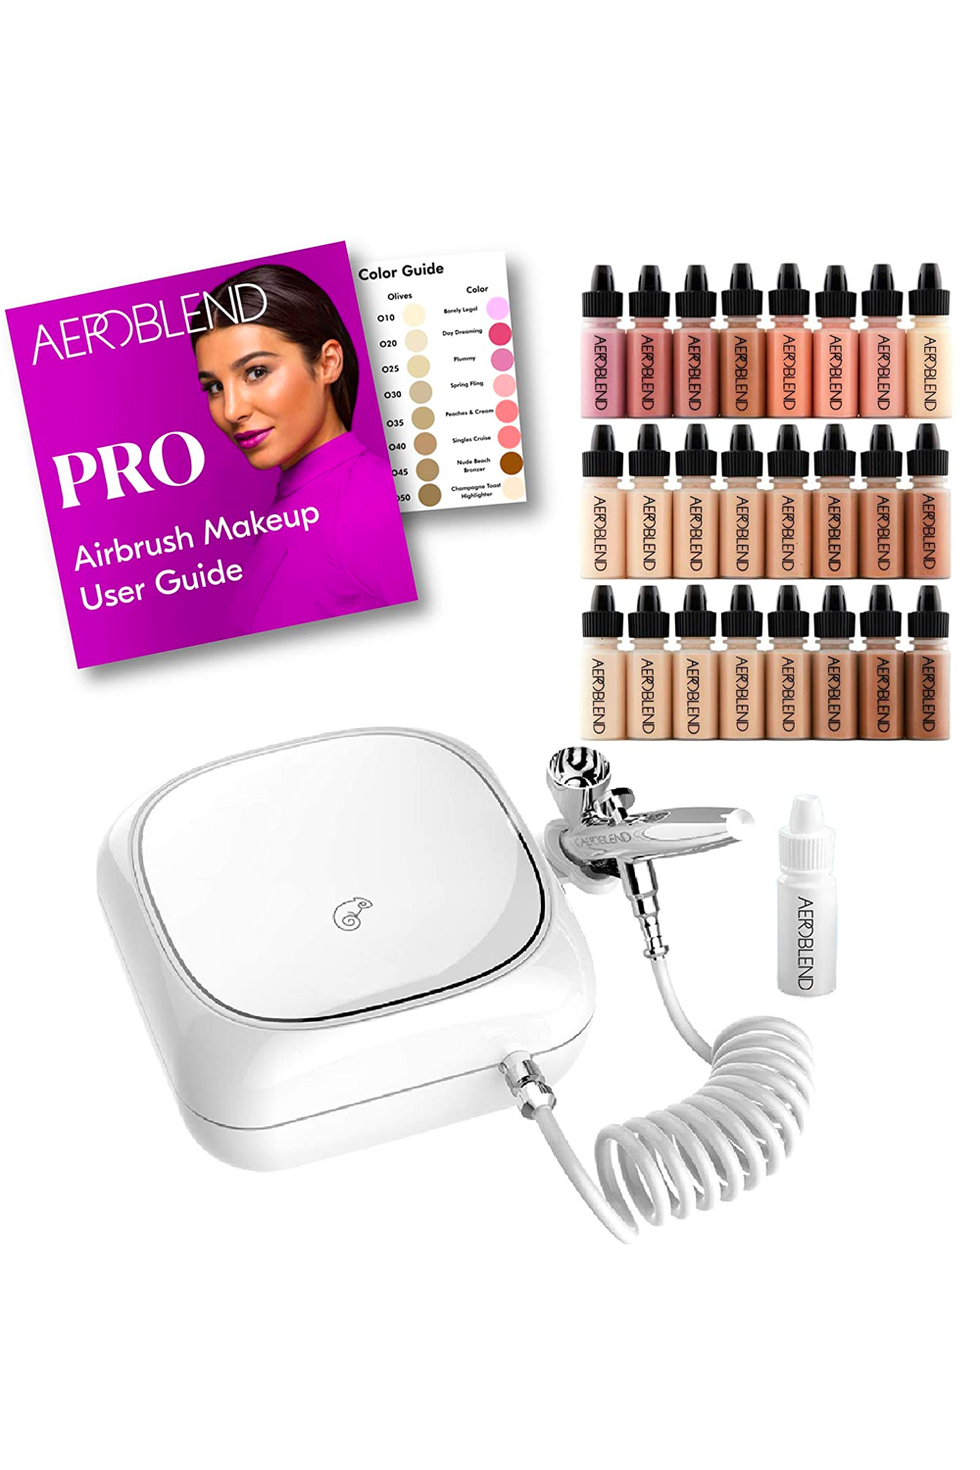 10 Best Airbrush Makeup Kit 2020 [Buying Guide] – Geekwrapped